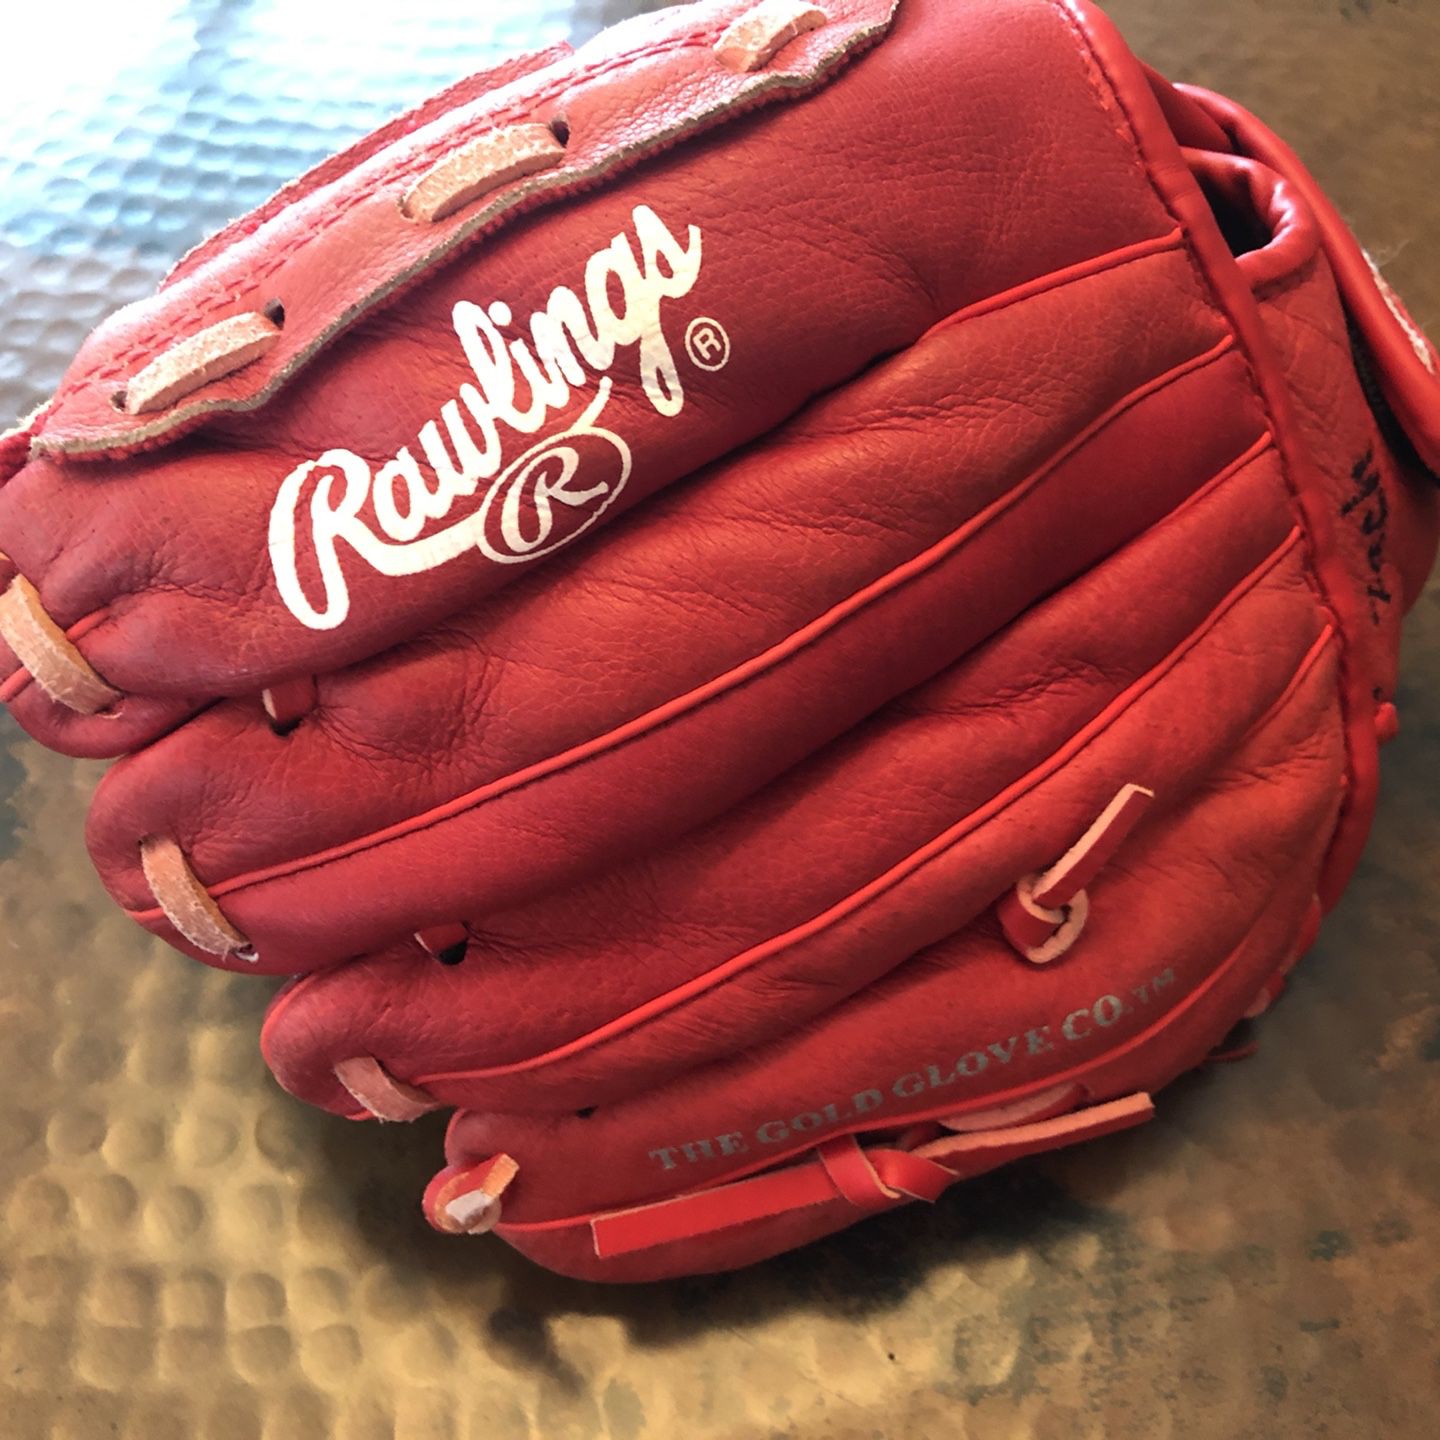 Rawlings Youth Baseball Glove, LIKE NEW Condition